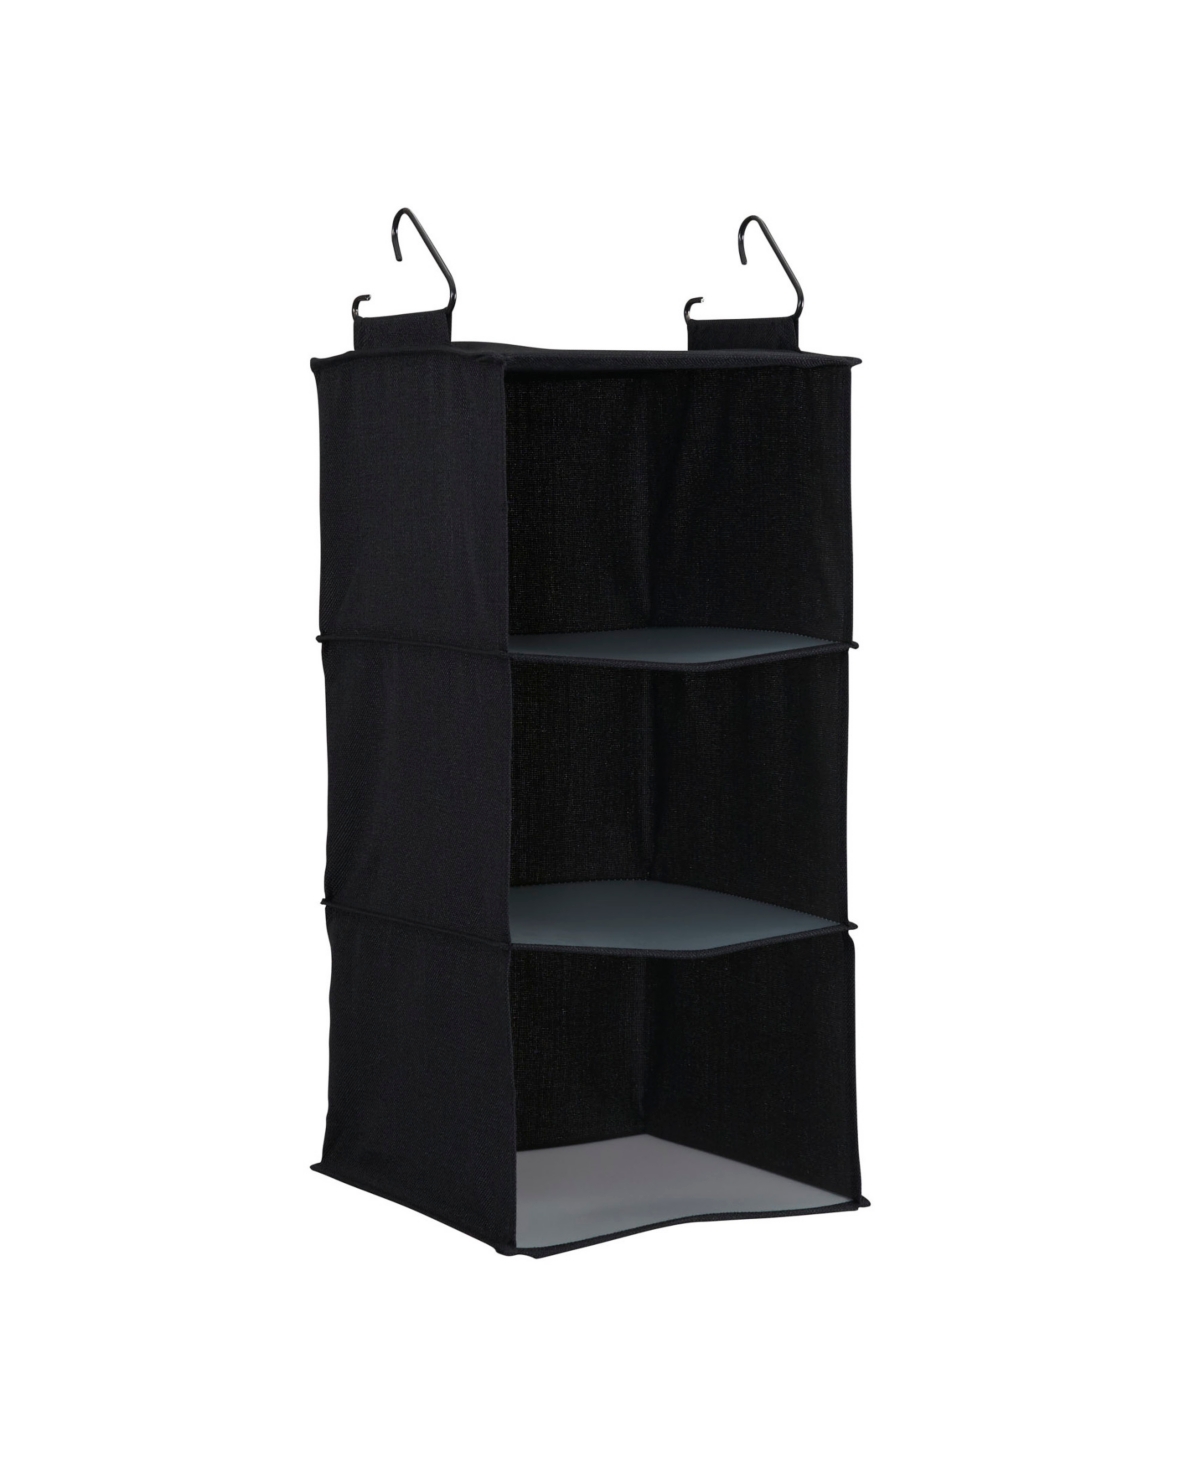 3 Shelf Hanging Closet Organizer - Black